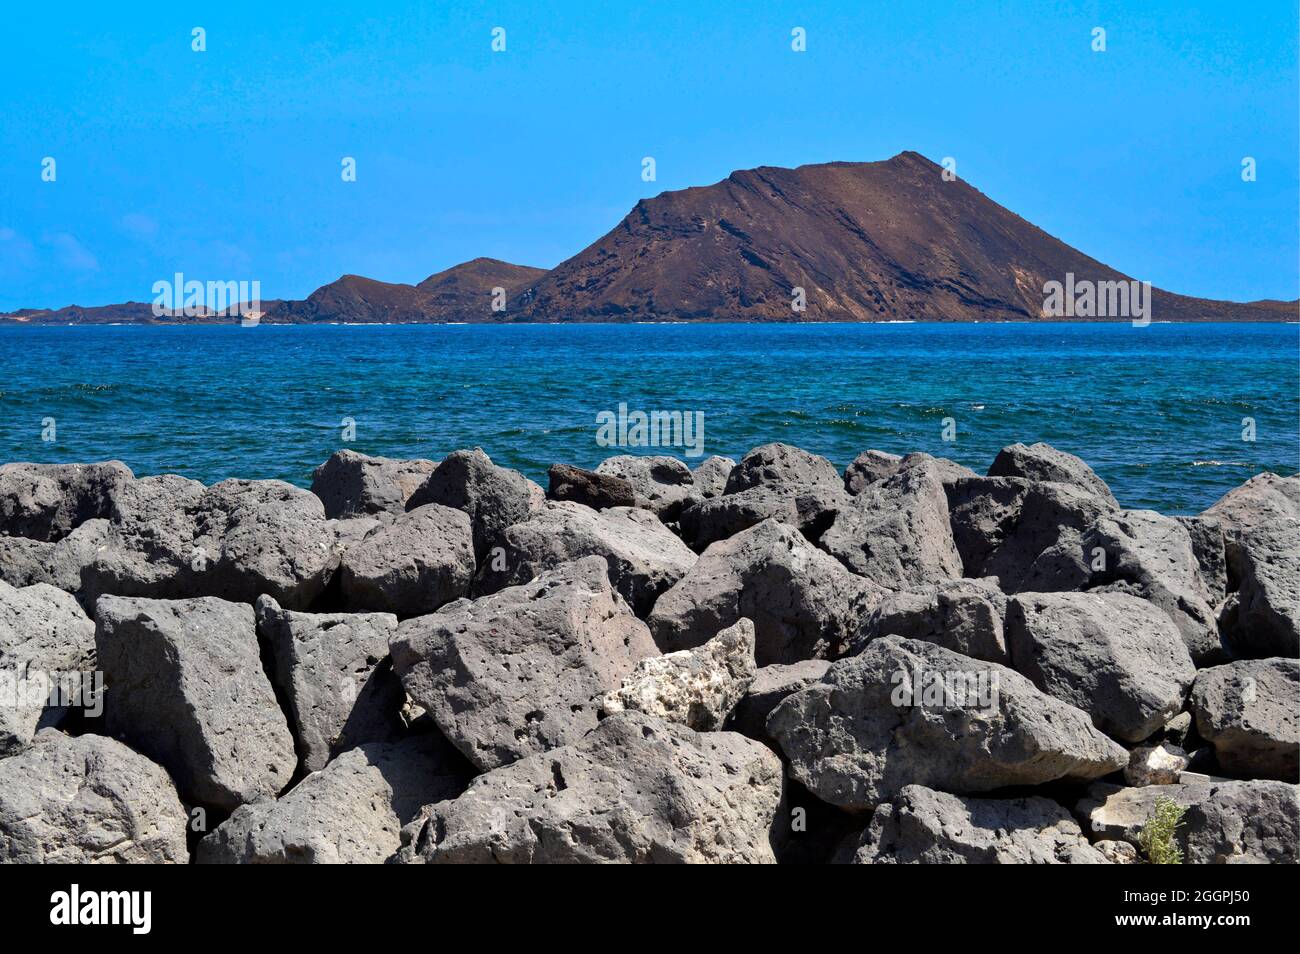 Isla de Lobos a volcanic island off the coast of Fuerteventura one of the Canary Islands Stock Photo